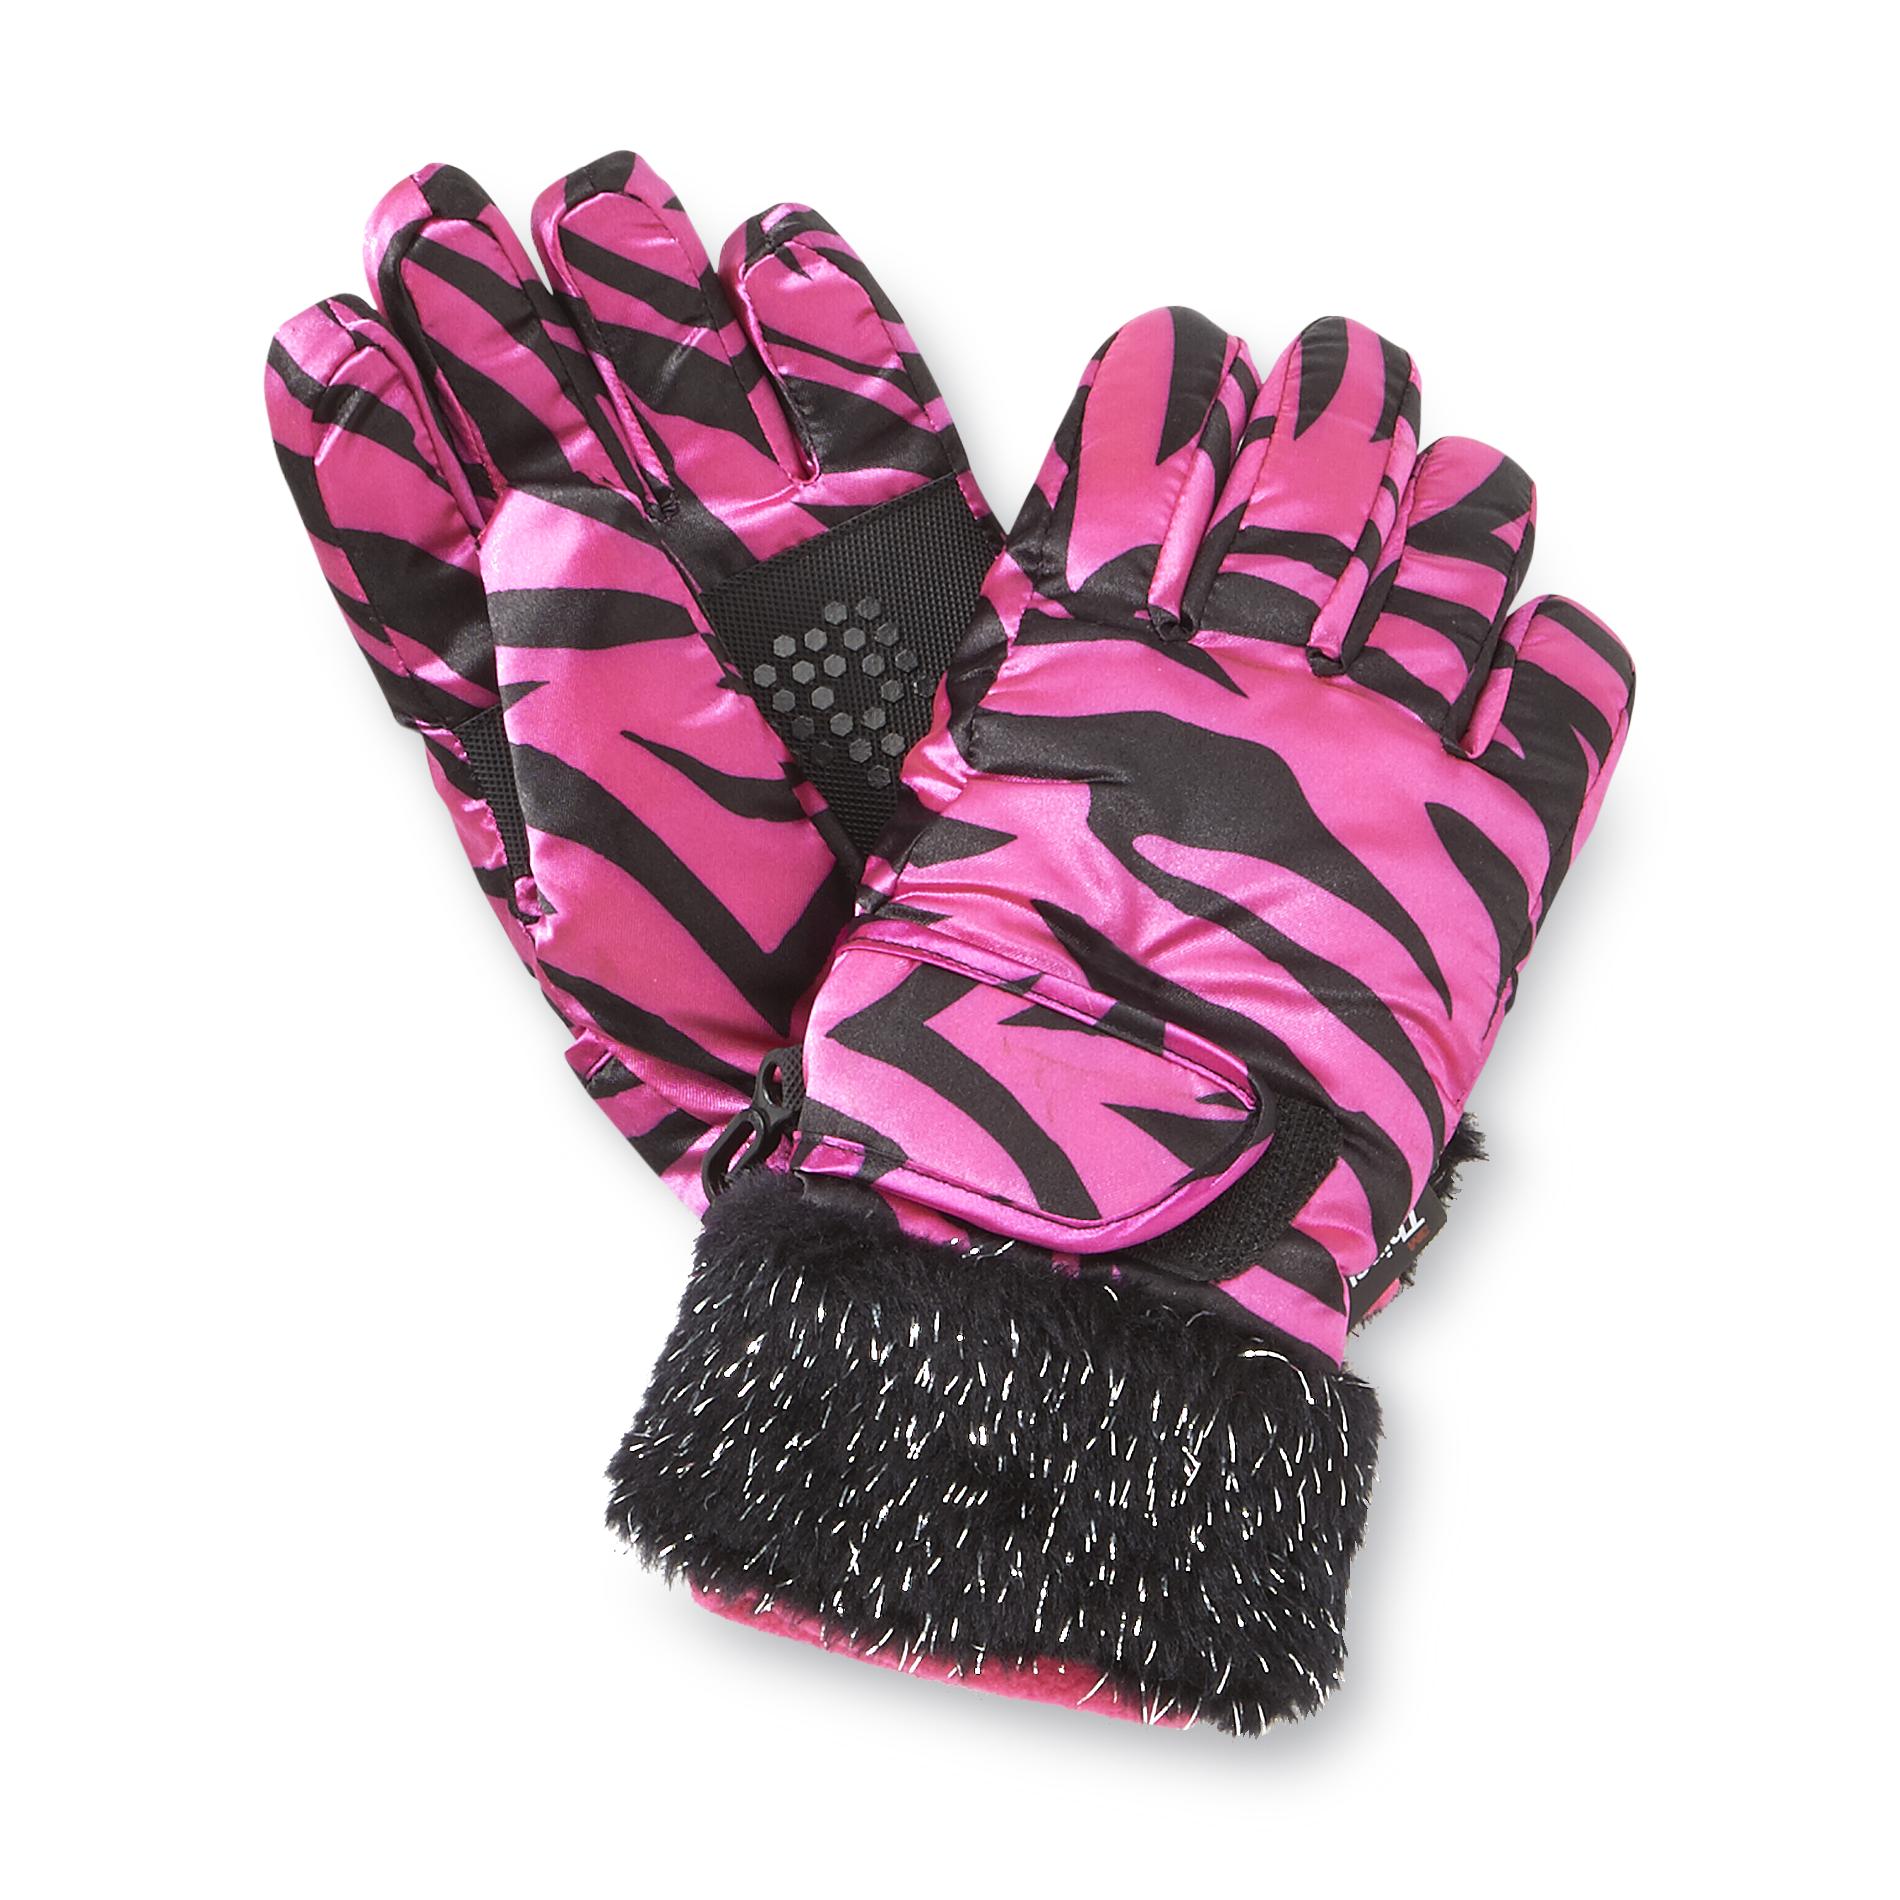 Canyon River Blues Girl's Printed Ski Gloves - Zebra Striped